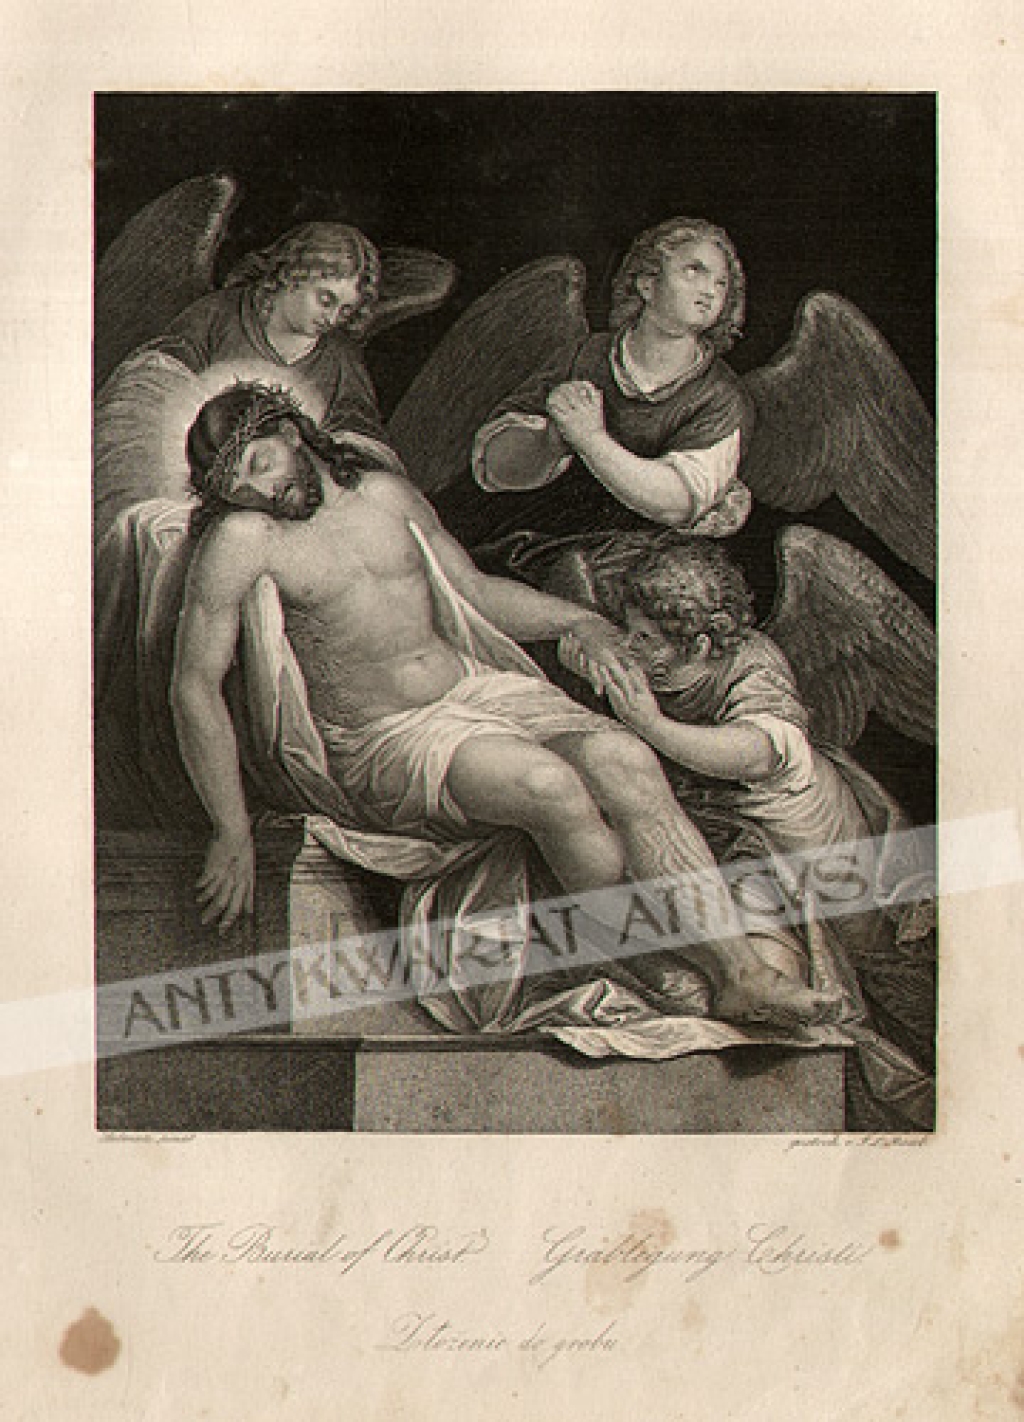 [rycina, 1850] Złożenie do grobu.[The Burial of Christ. Grablegung Christi]